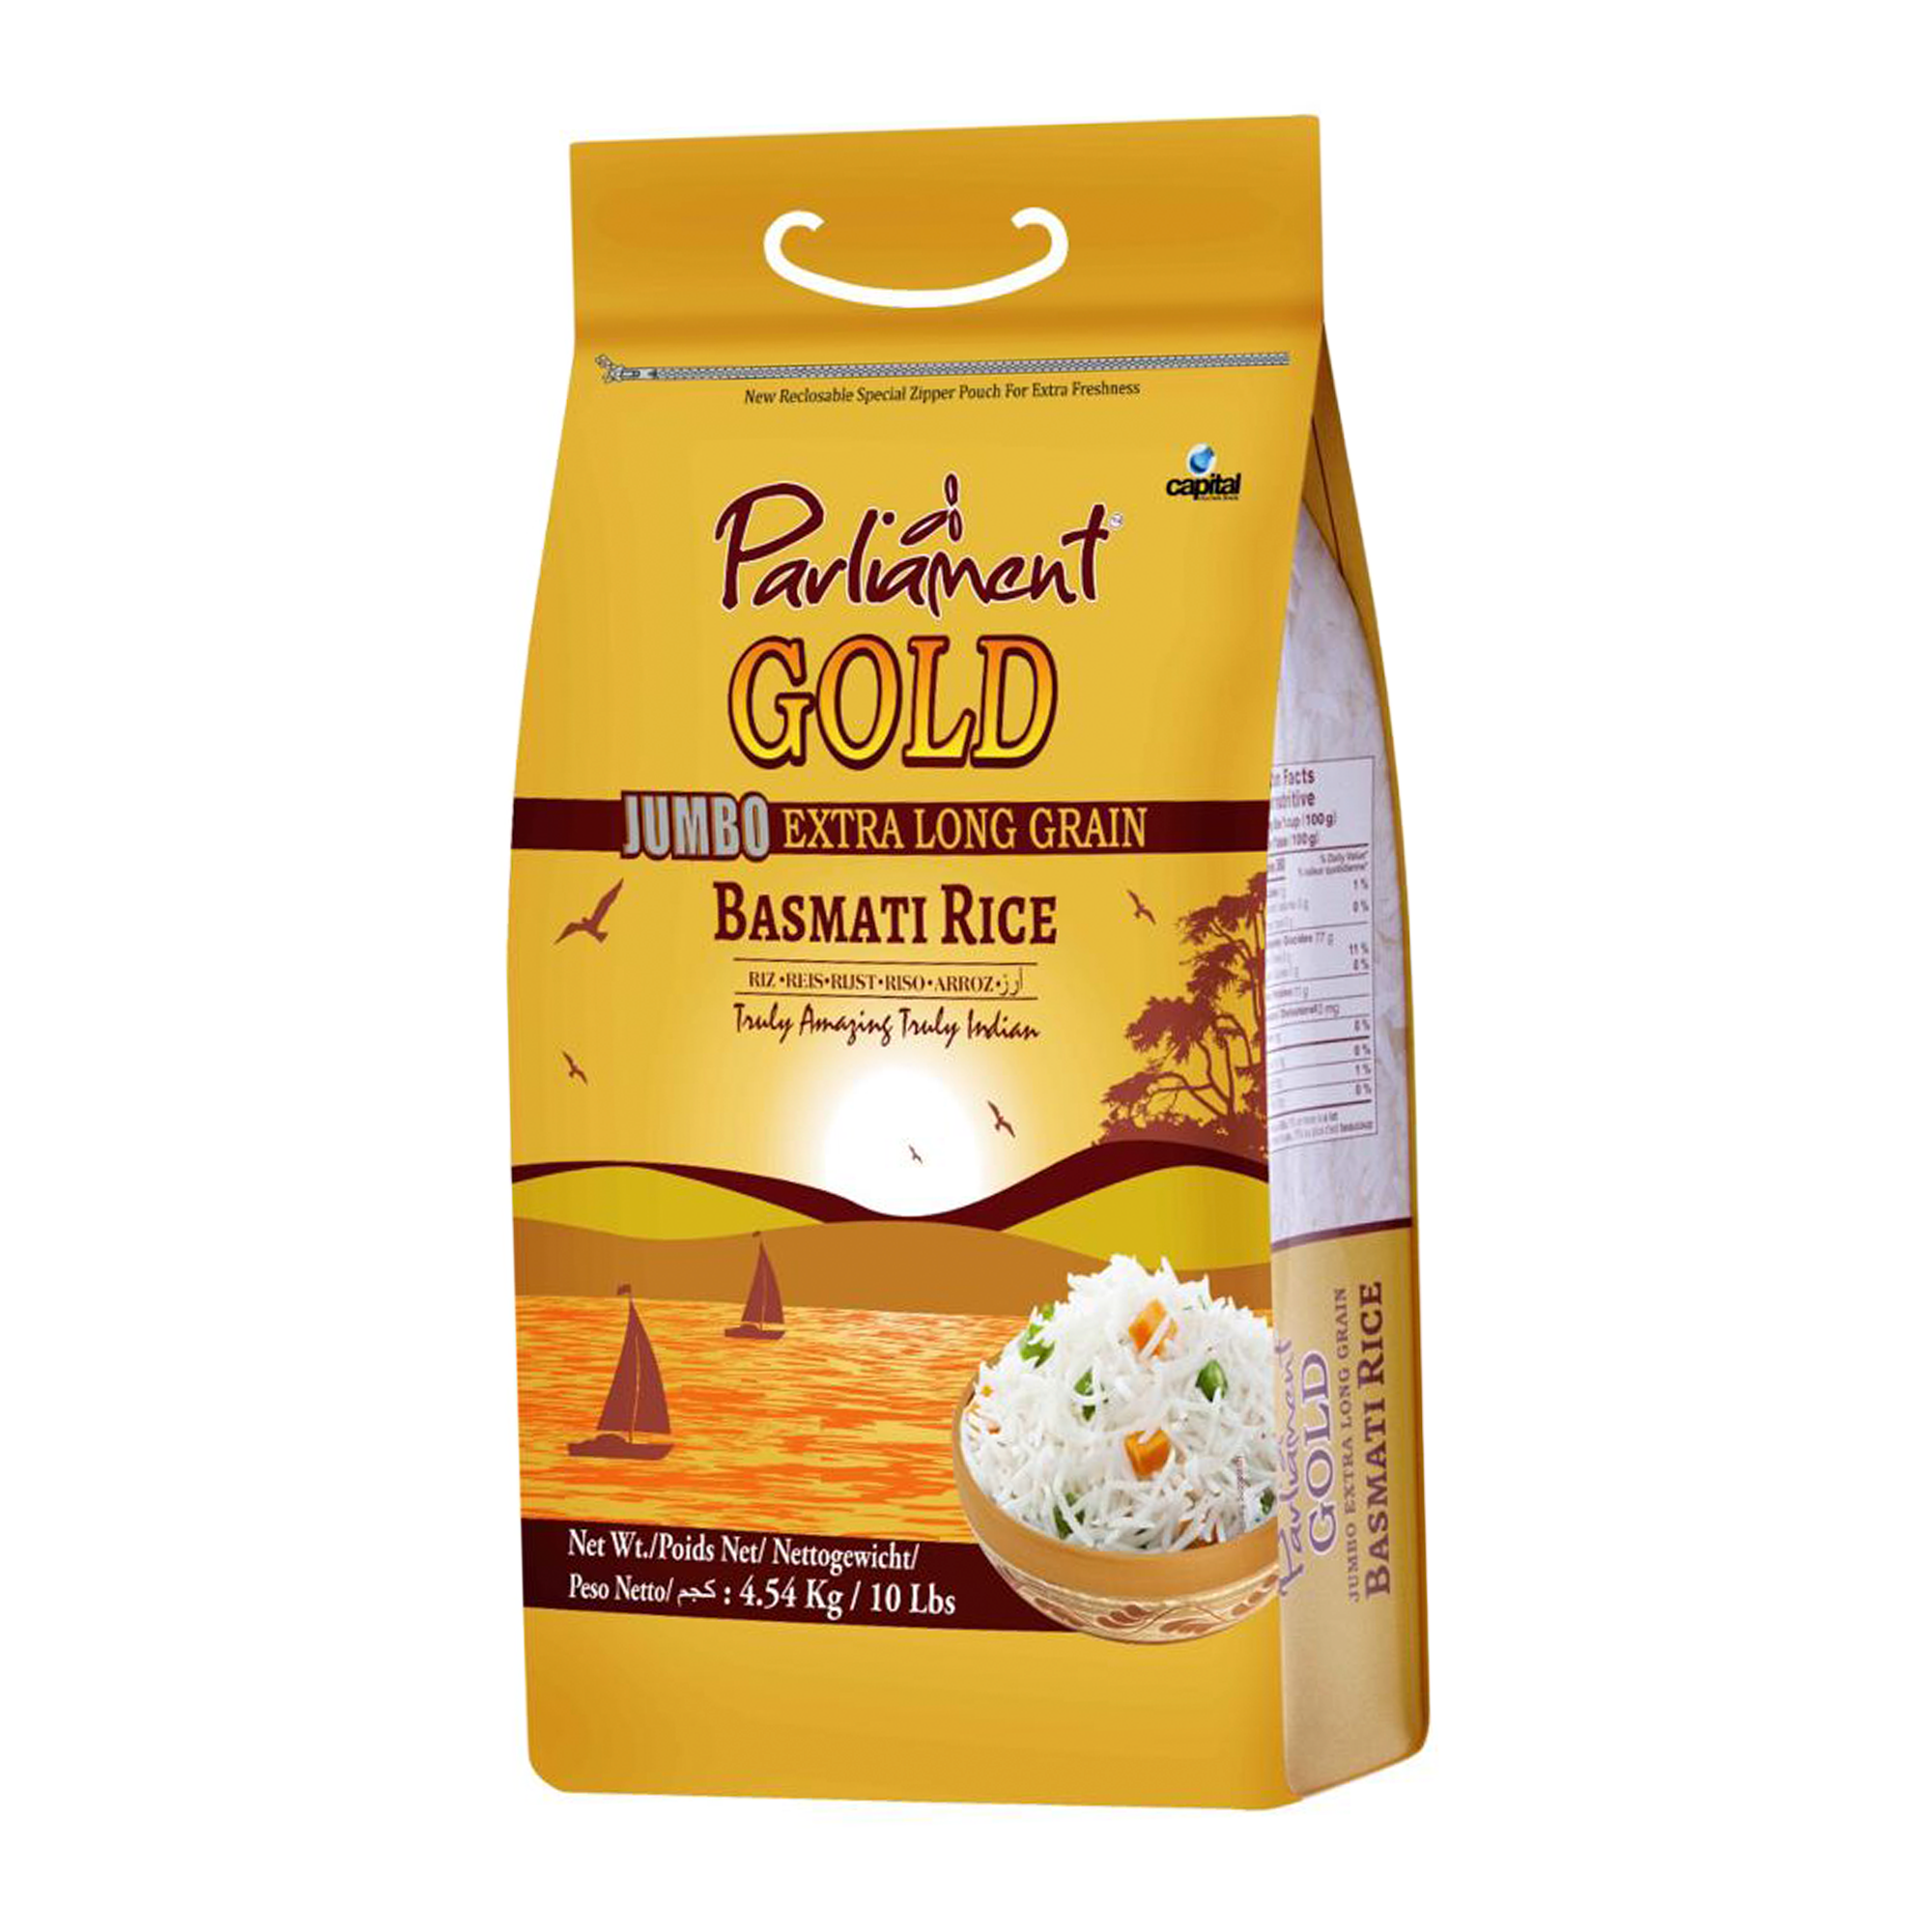 Parliament Gold Jumbo Extra Long Basmati Rice -10 lbs